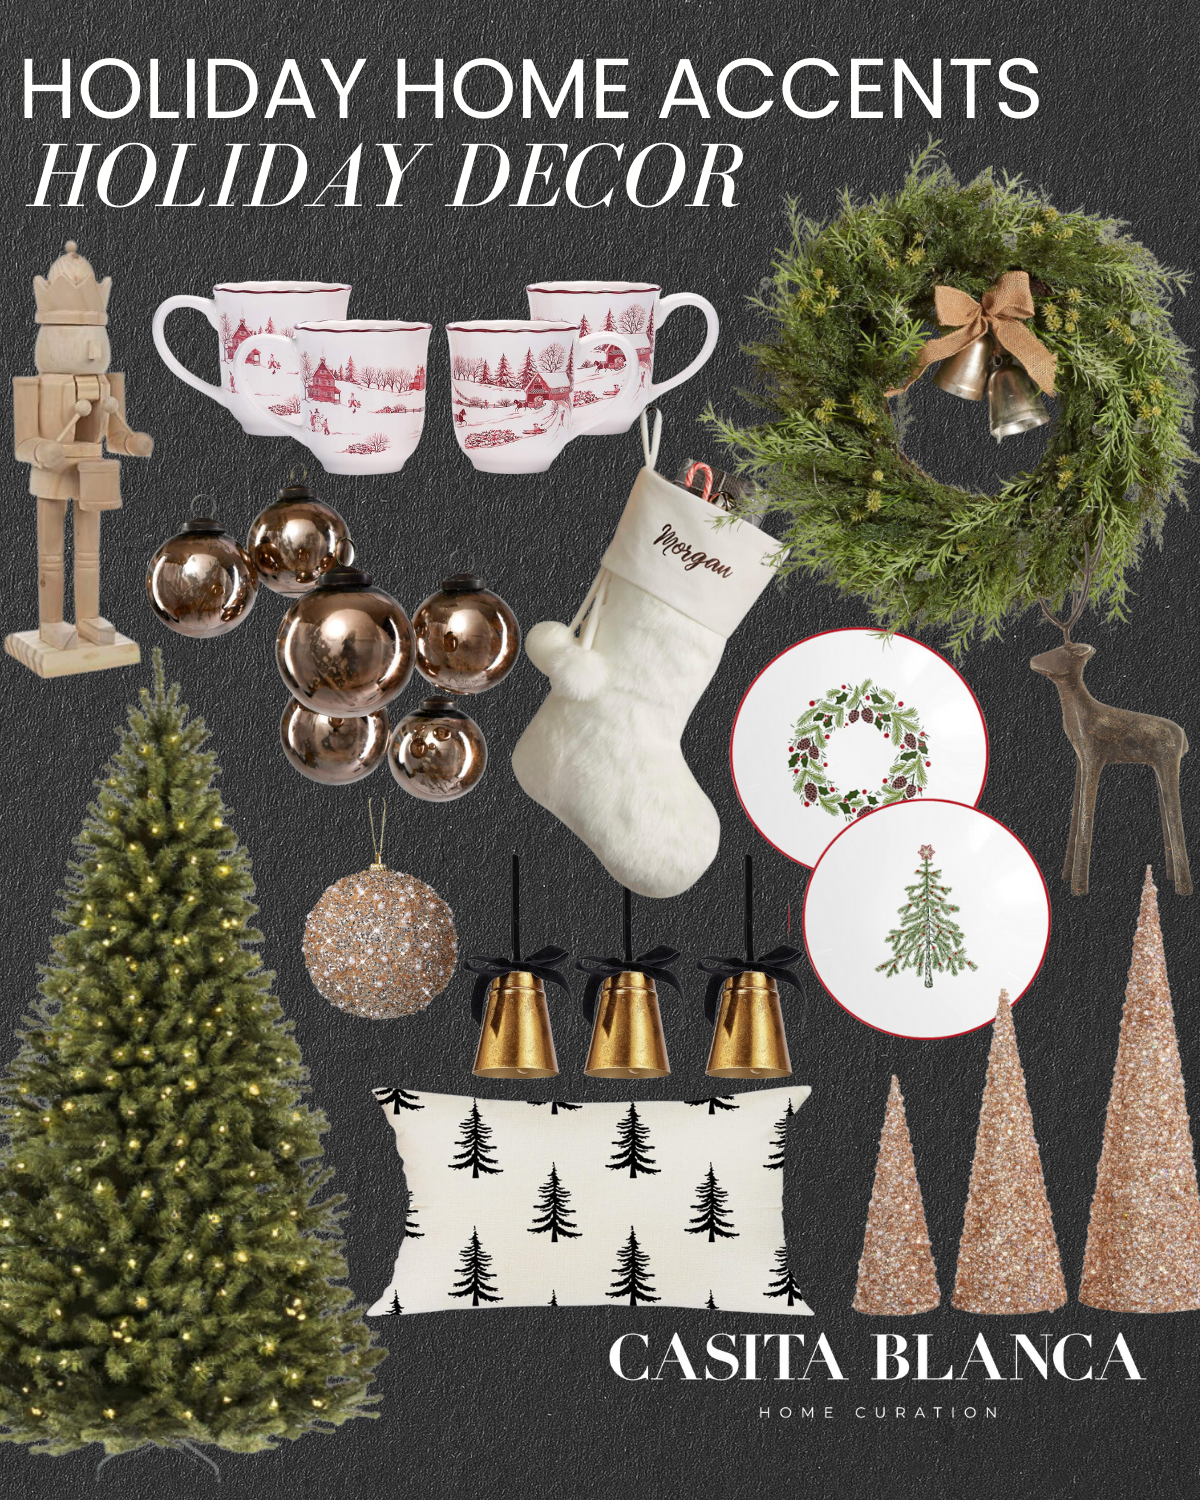 holiday home accents | #holiday #home #accents #holidayhome #holidaydecor #holidayhomedecor #christmas #christmastree #pillow #wreath #stockings #mugs #nutcracker